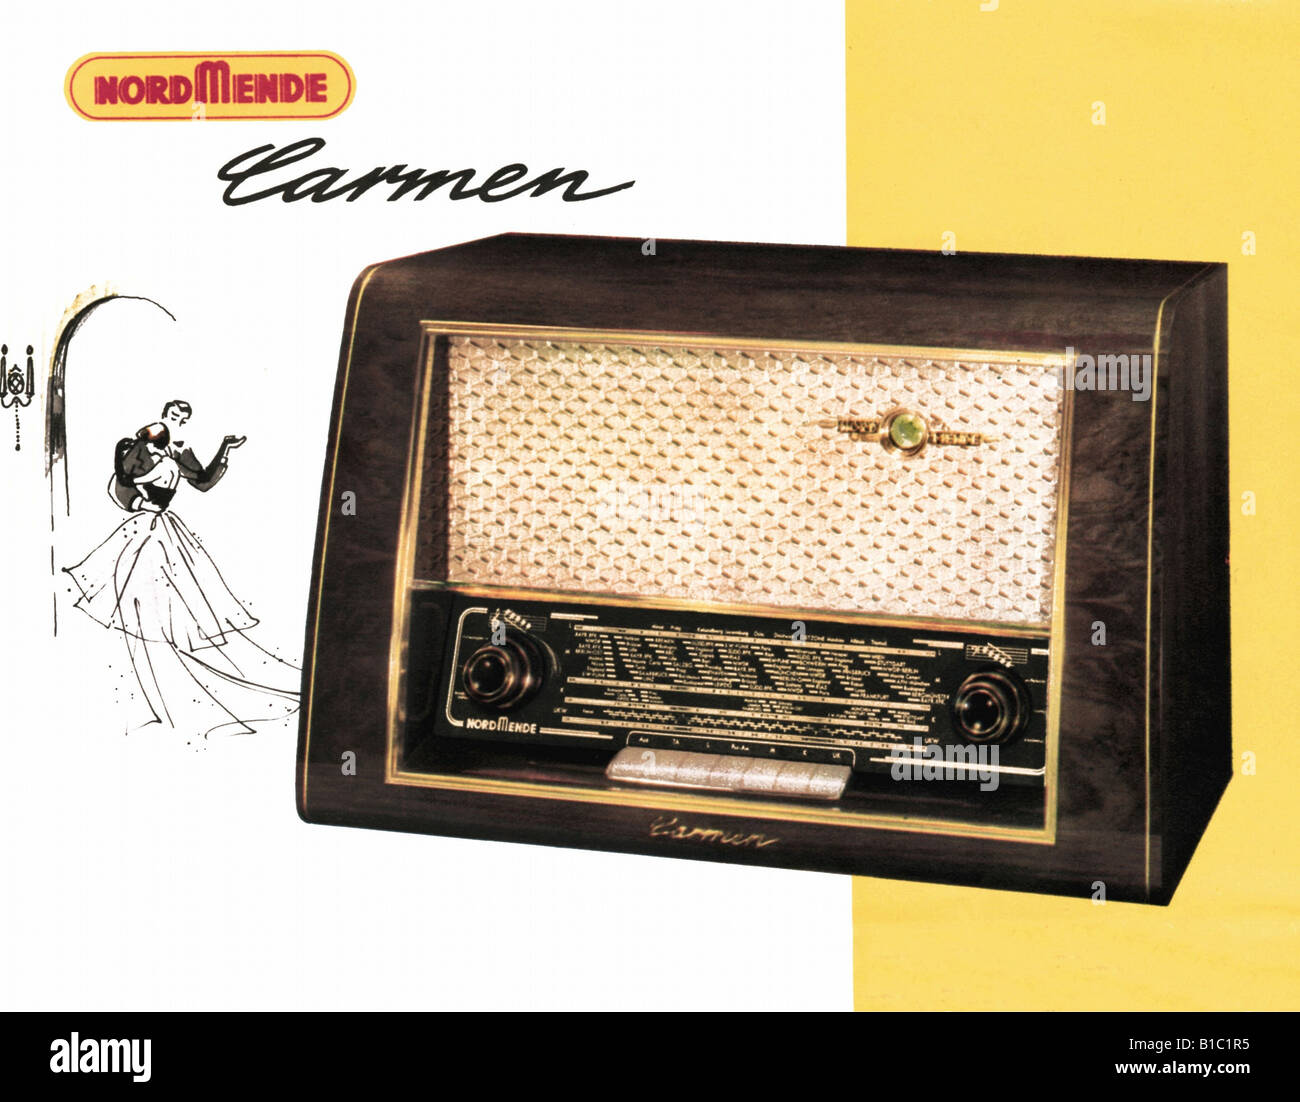 broadcast, radio, advertising, Nordmende Carmen, Germany, 1955, Stock Photo